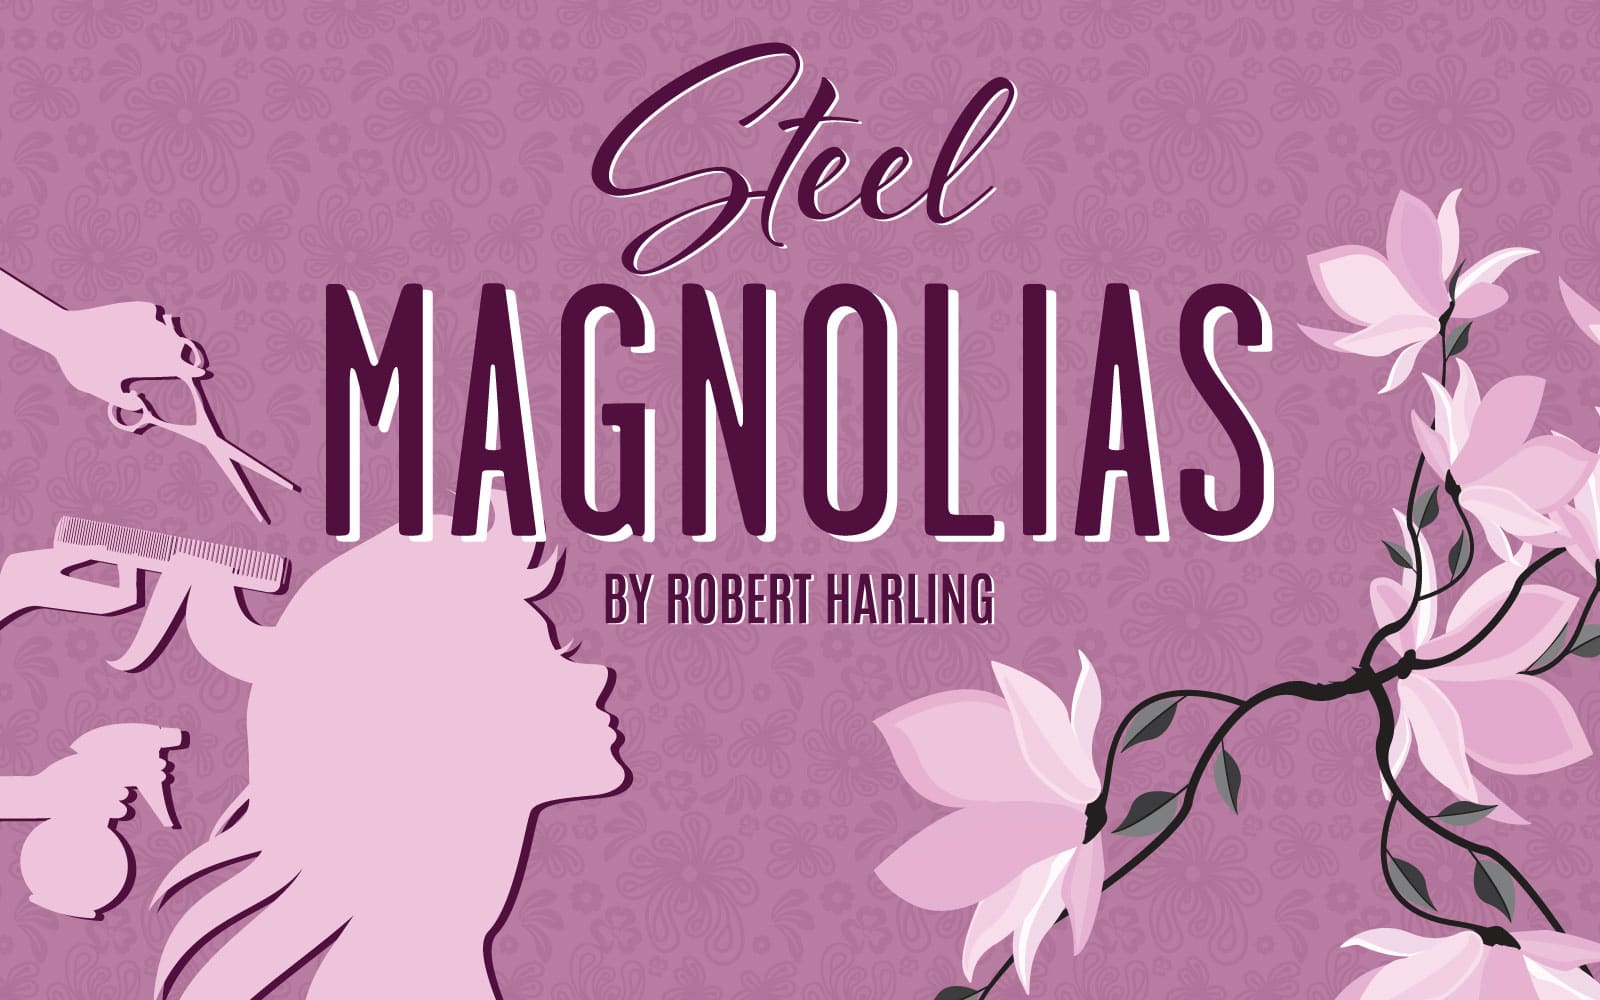 Steel magnolias